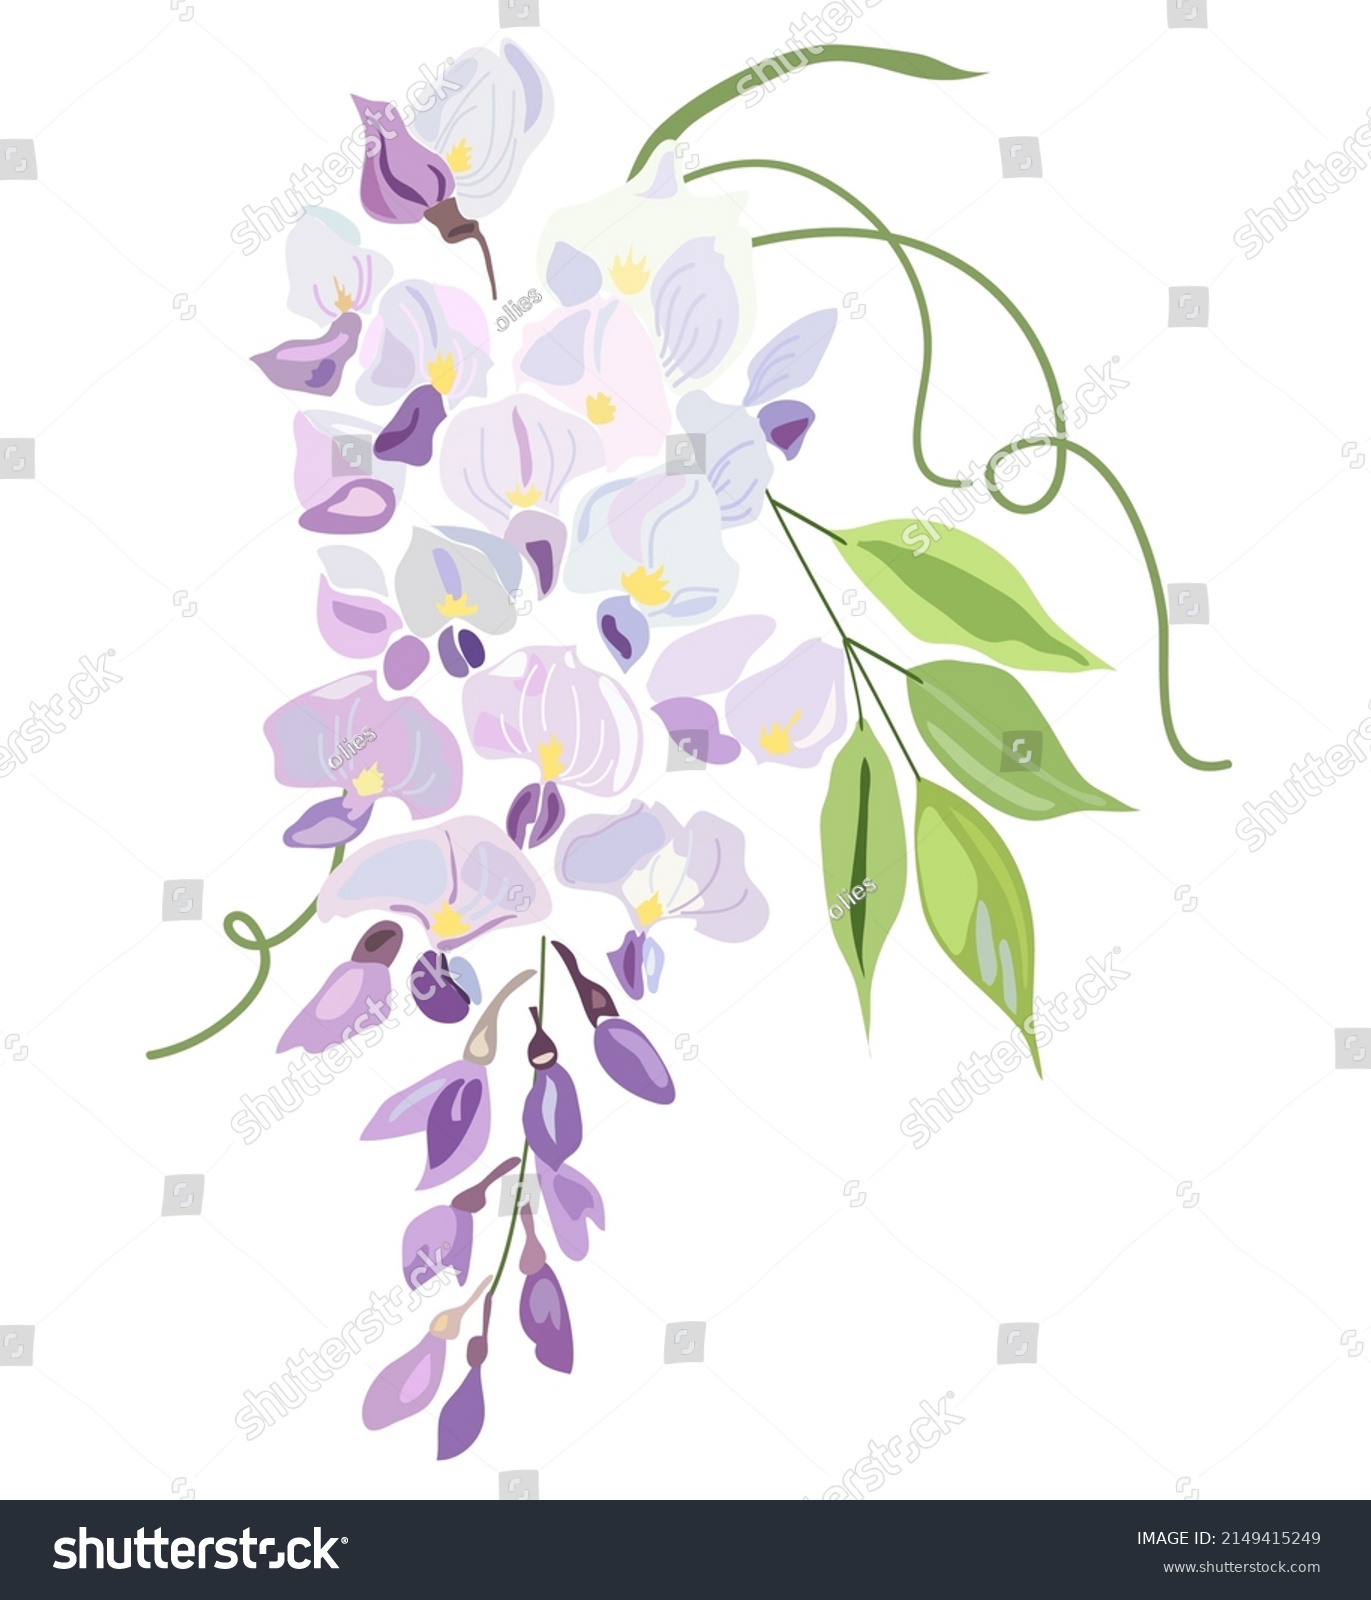 SVG of Illustration of wisteria flowers. Spring and summer. illustration design elements plant wisteria svg